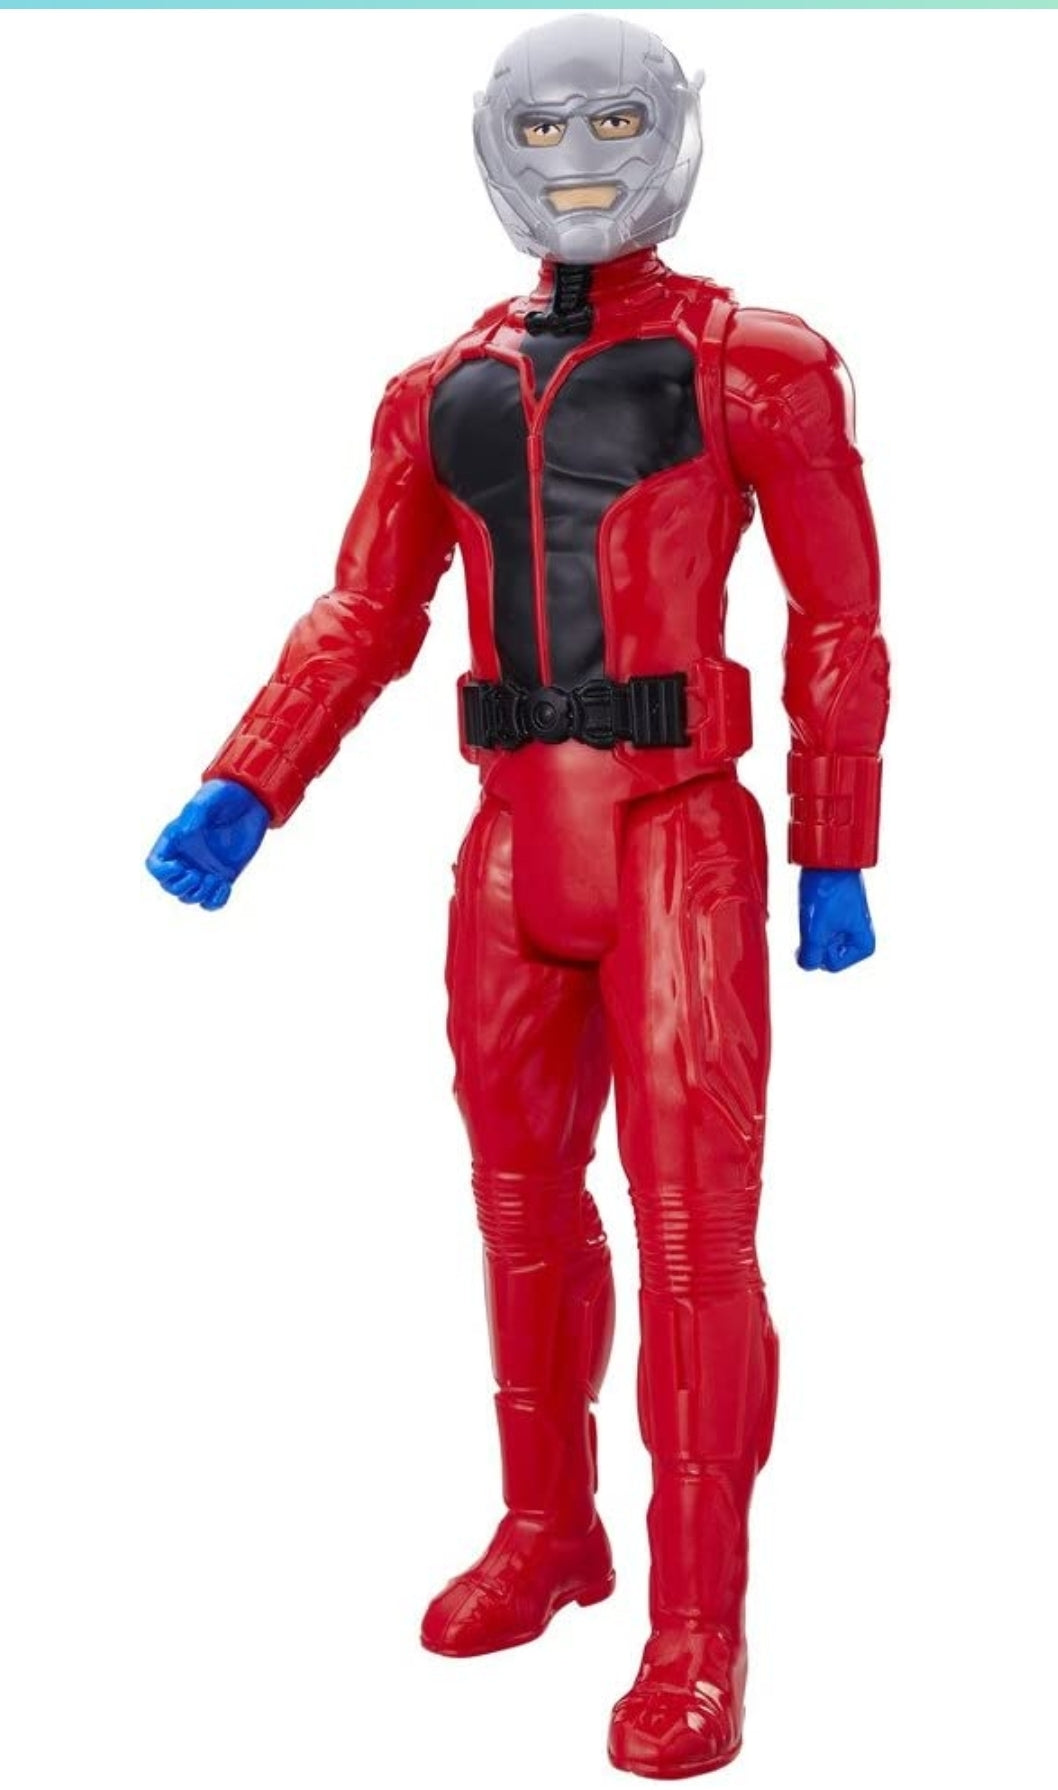 New *ANT-MAN Marvel Avengers Titan Hero Series 12" Action Figure